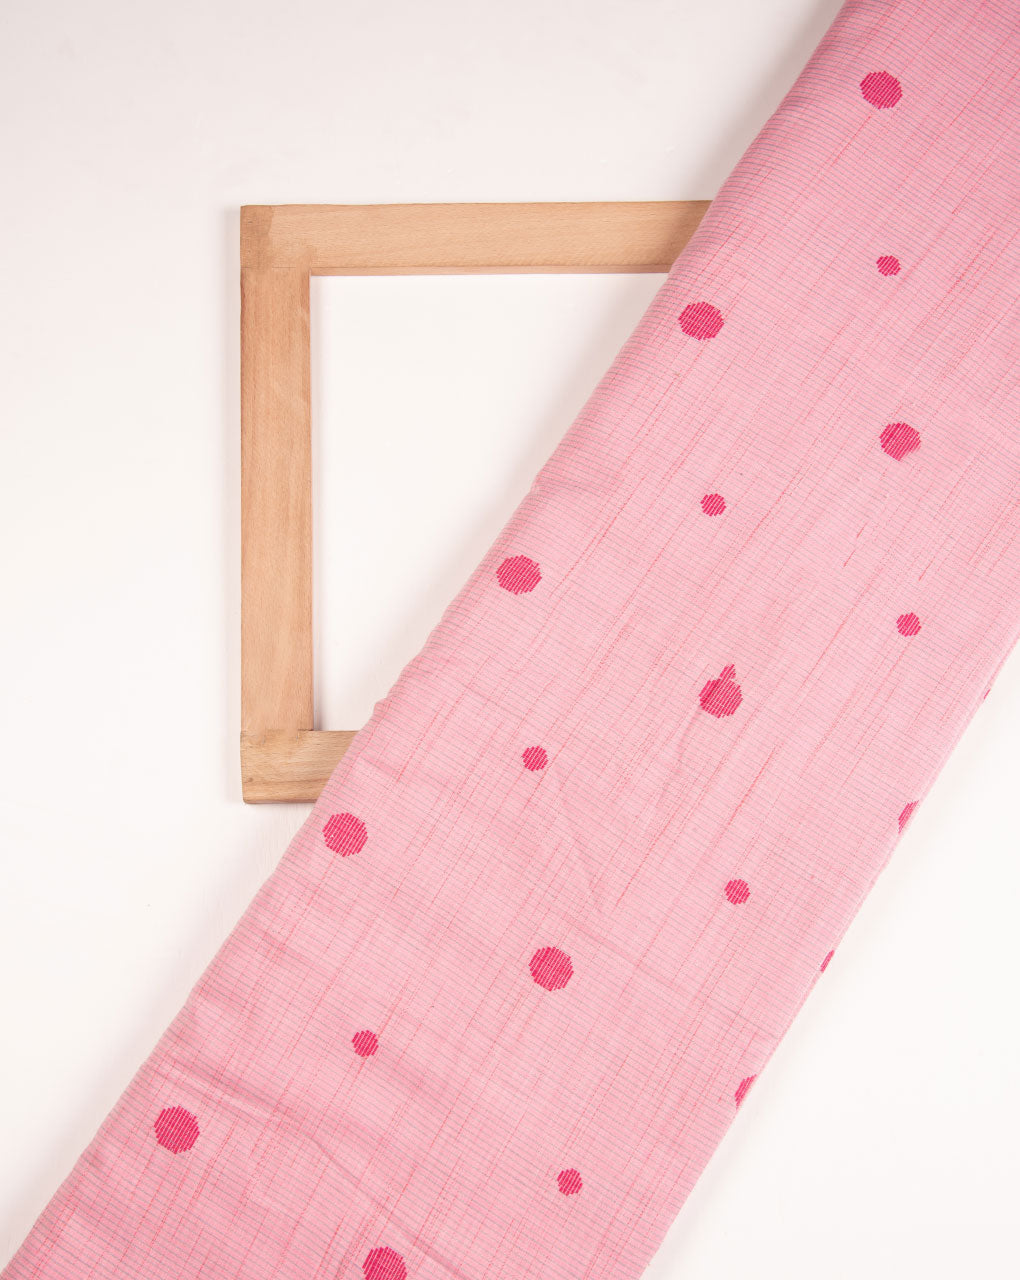 Polka Dots Woven Jacquard Loom Textured Cotton Fabric - Fabriclore.com